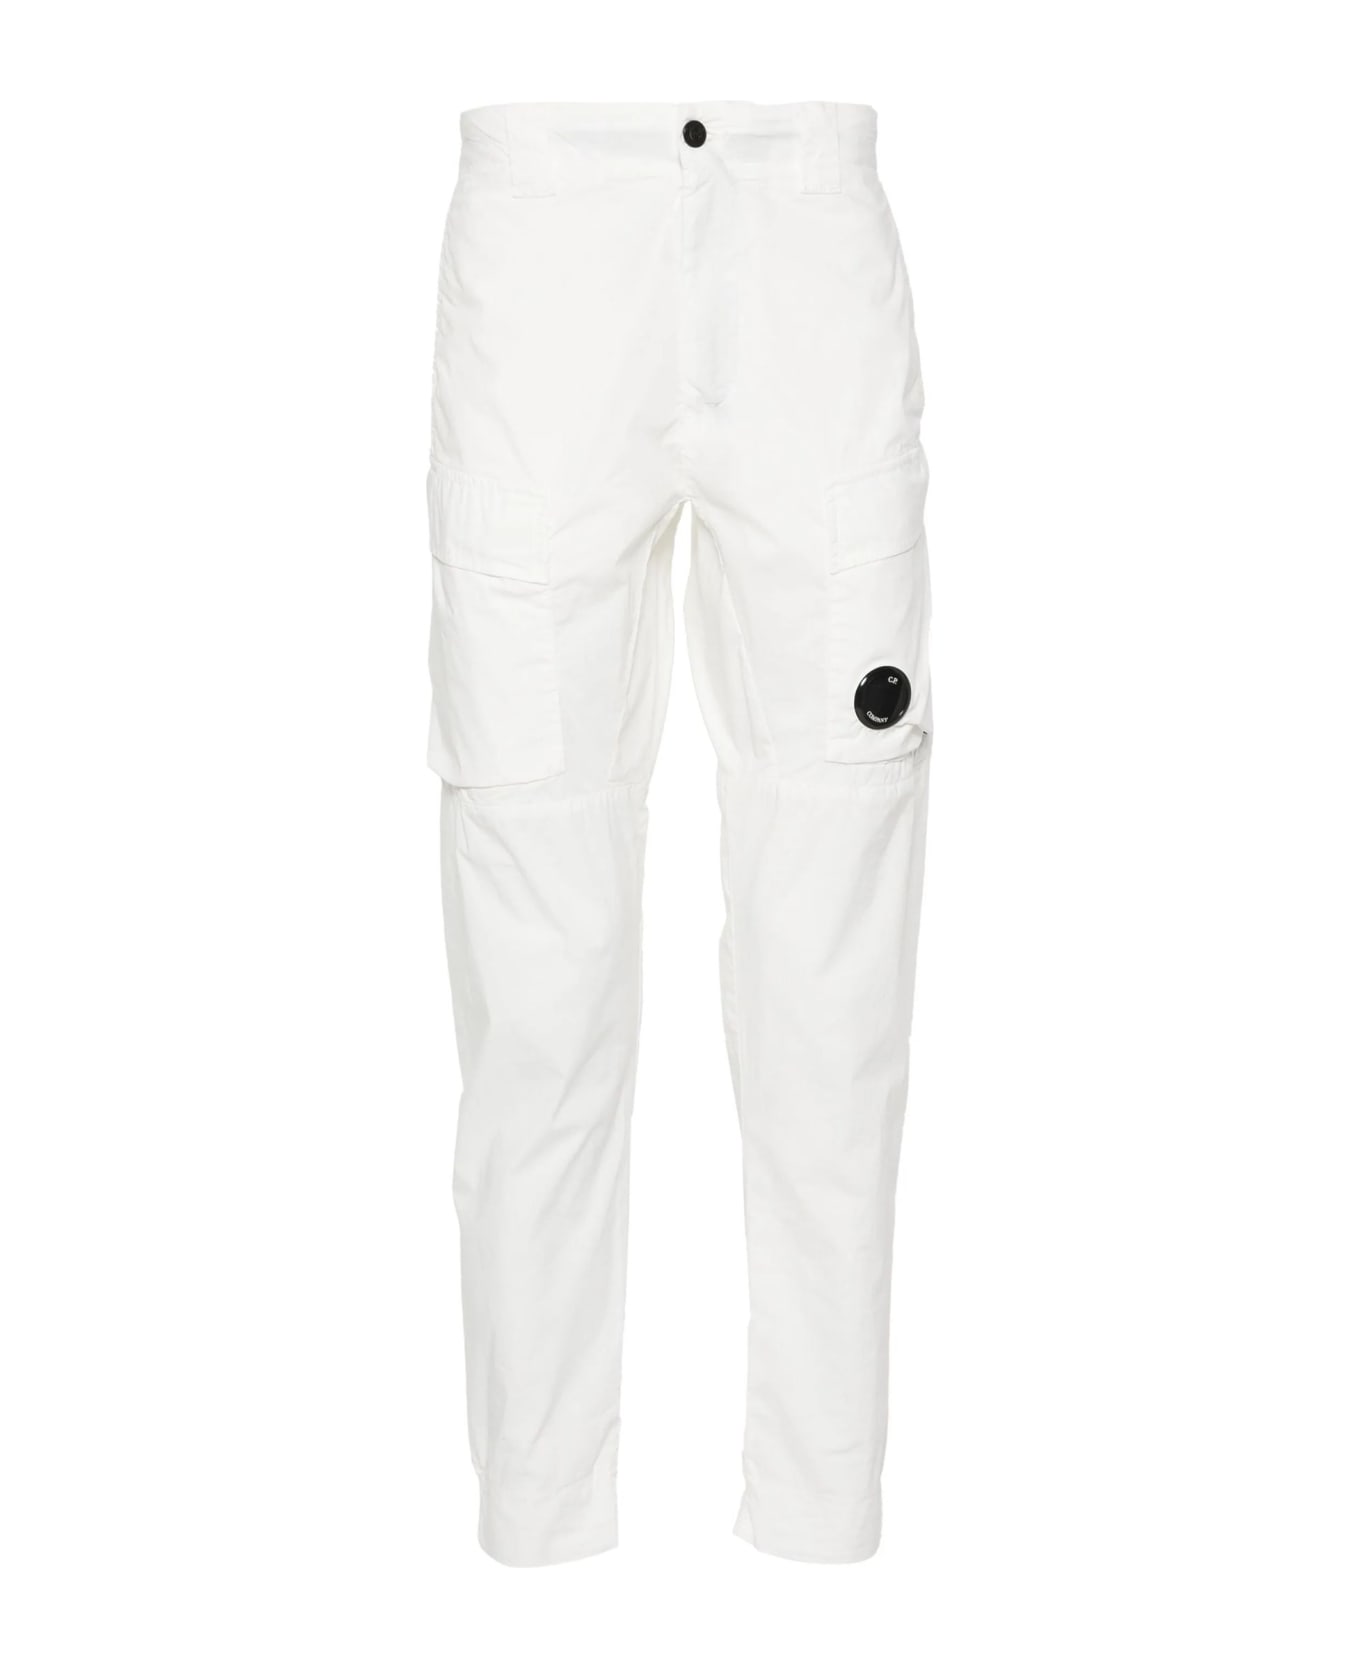 C.P. Company C.p.company Trousers White - White ボトムス